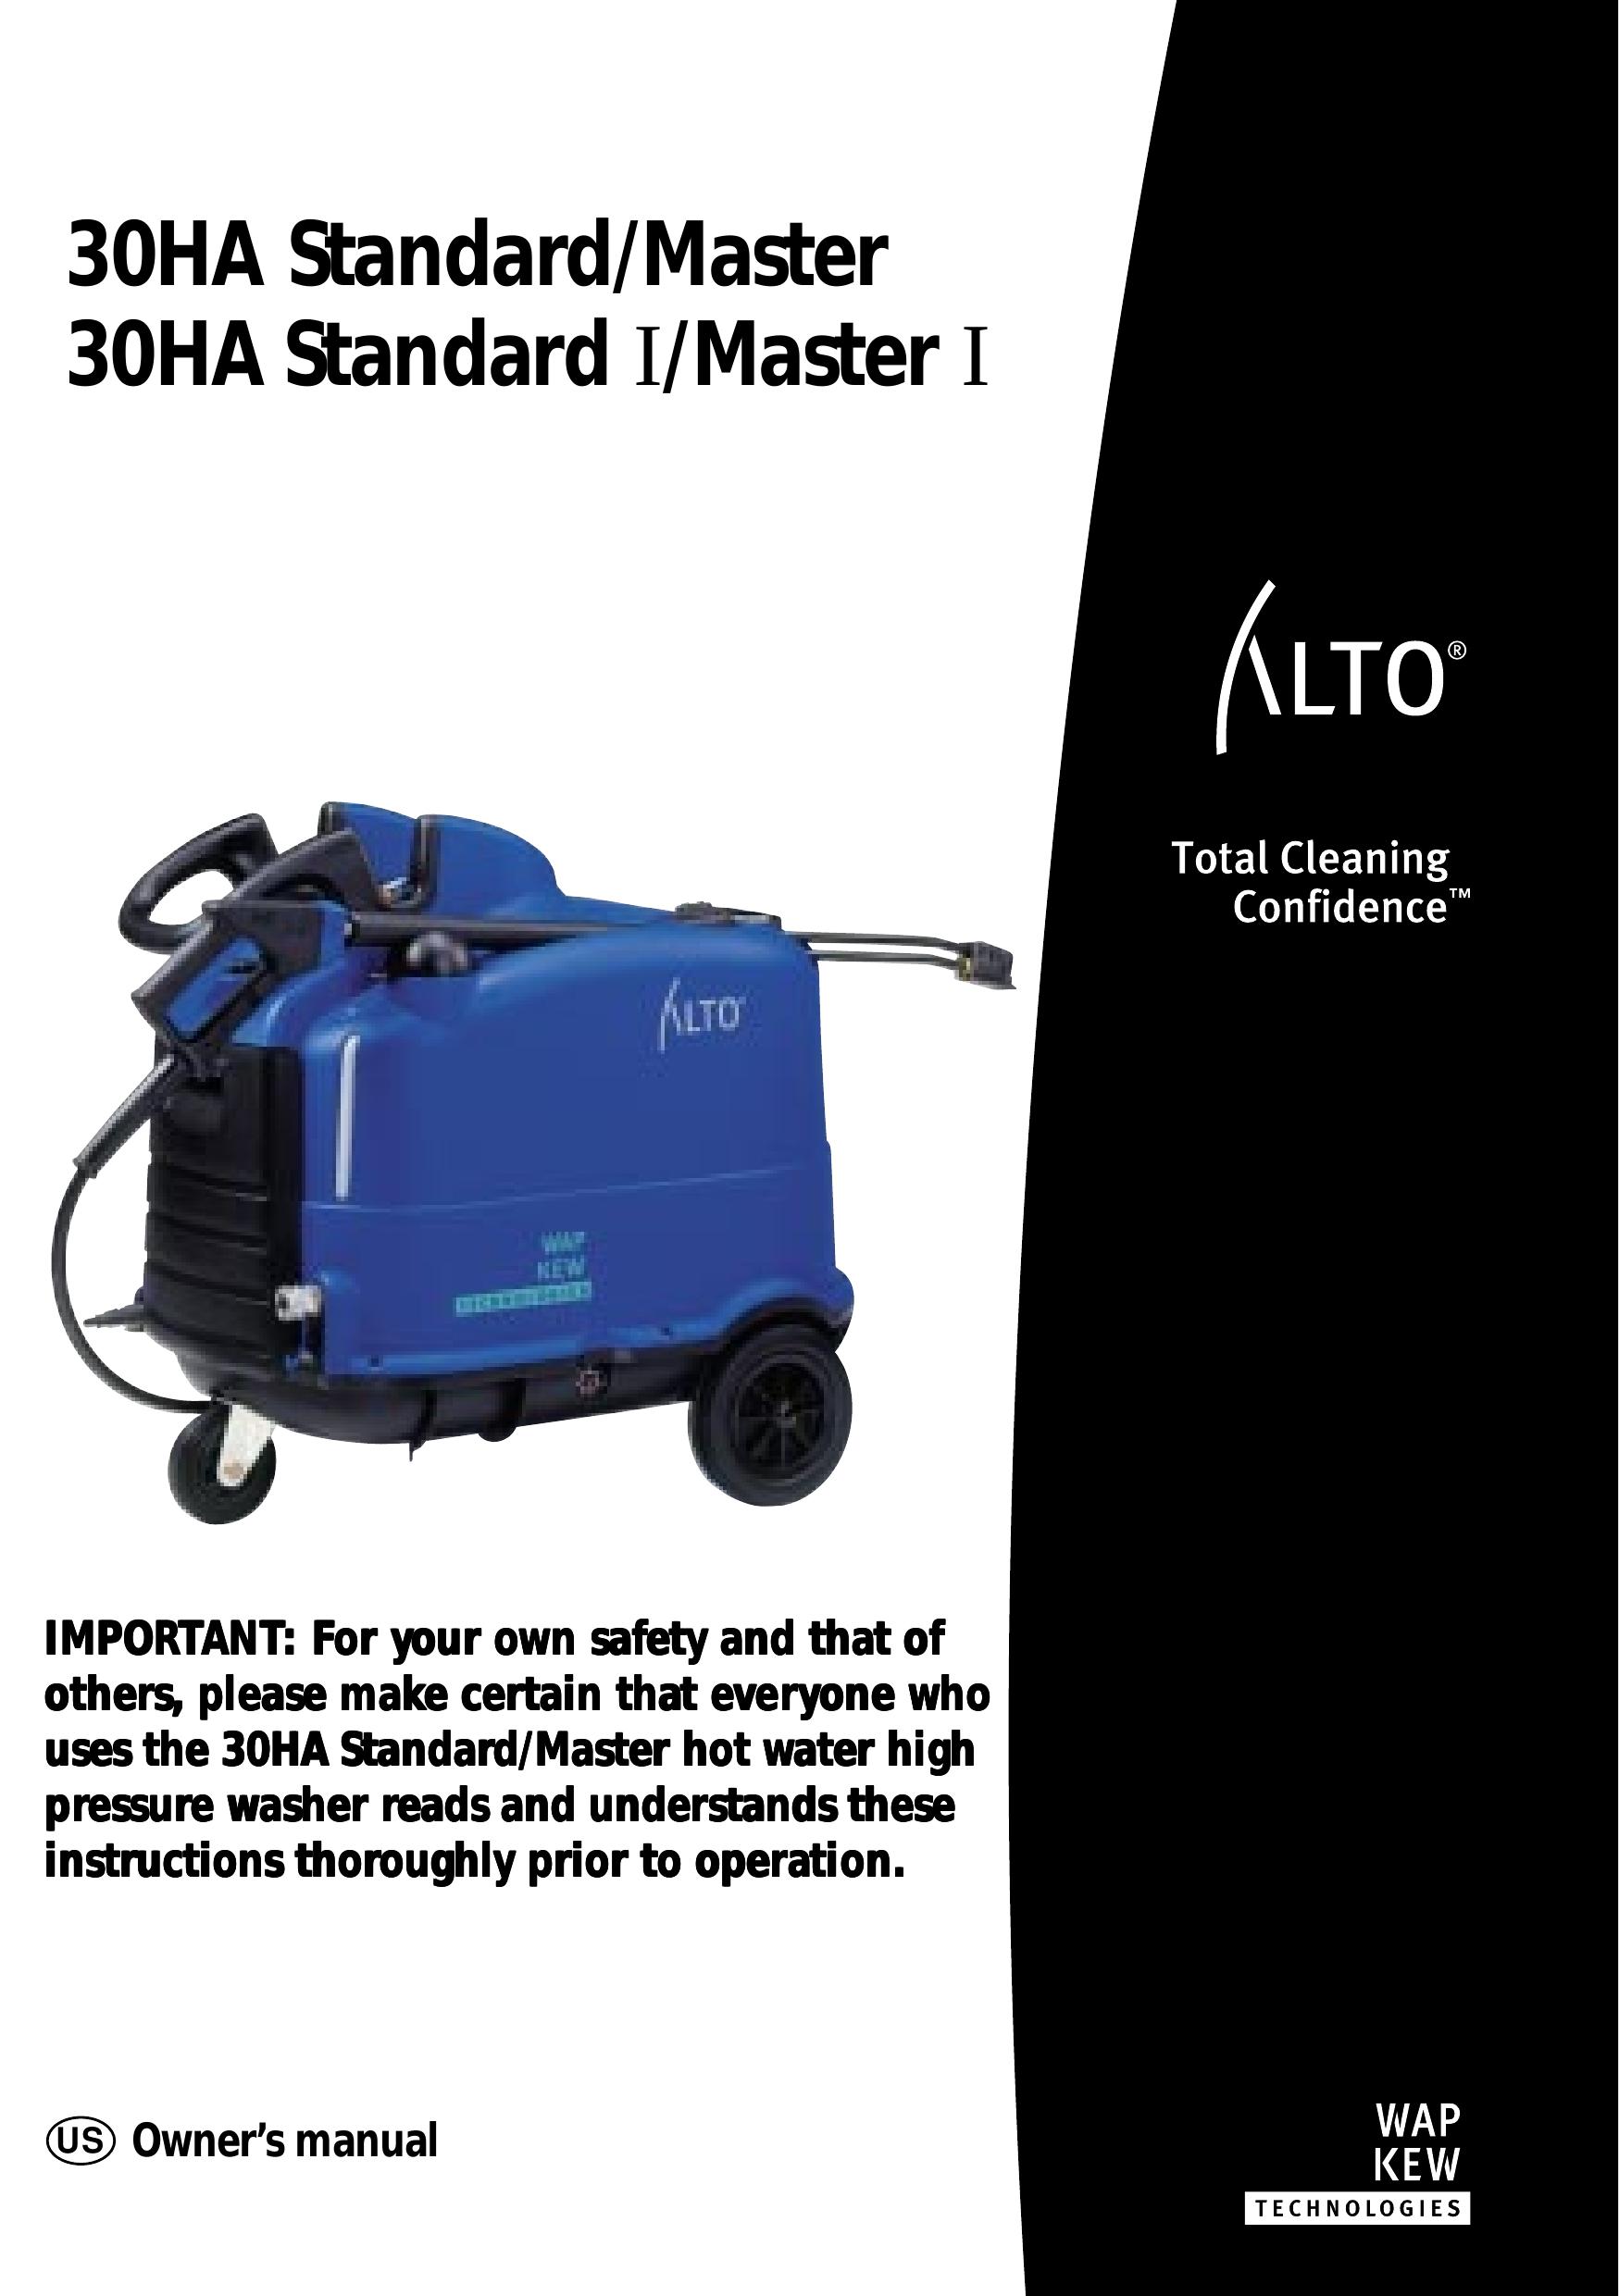 Alto-Shaam 30HA STANDARD I/MASTER I Pressure Washer User Manual